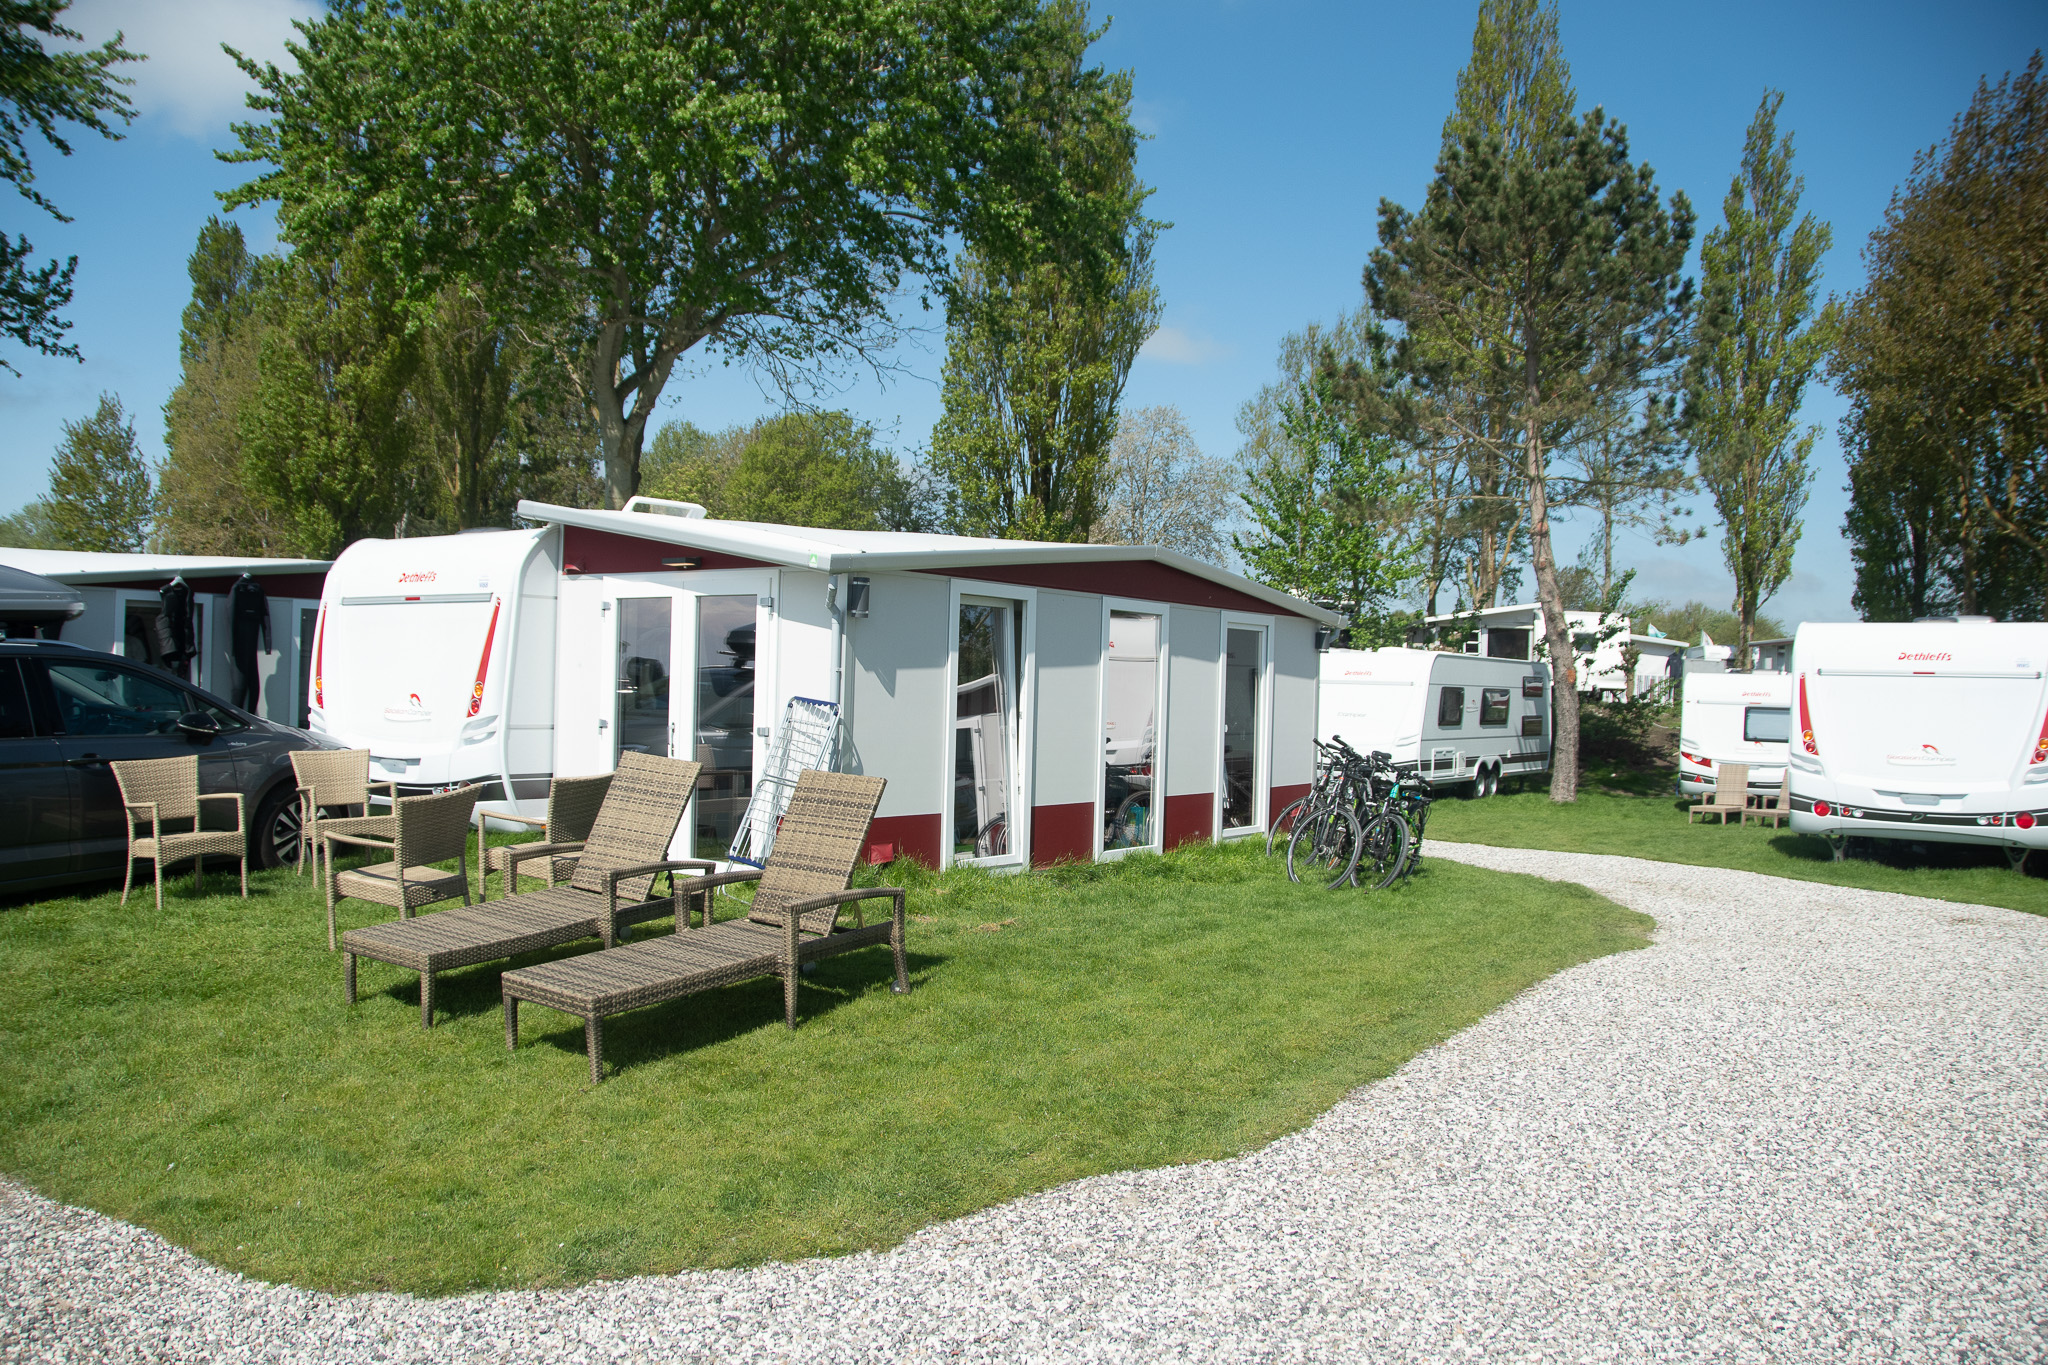 Location - Caravane Cat. 0+, 2 Adultes + 3 Enfants Ou 4 Adultes - Camping- und Ferienpark Wulfener Hals-Fehmarn